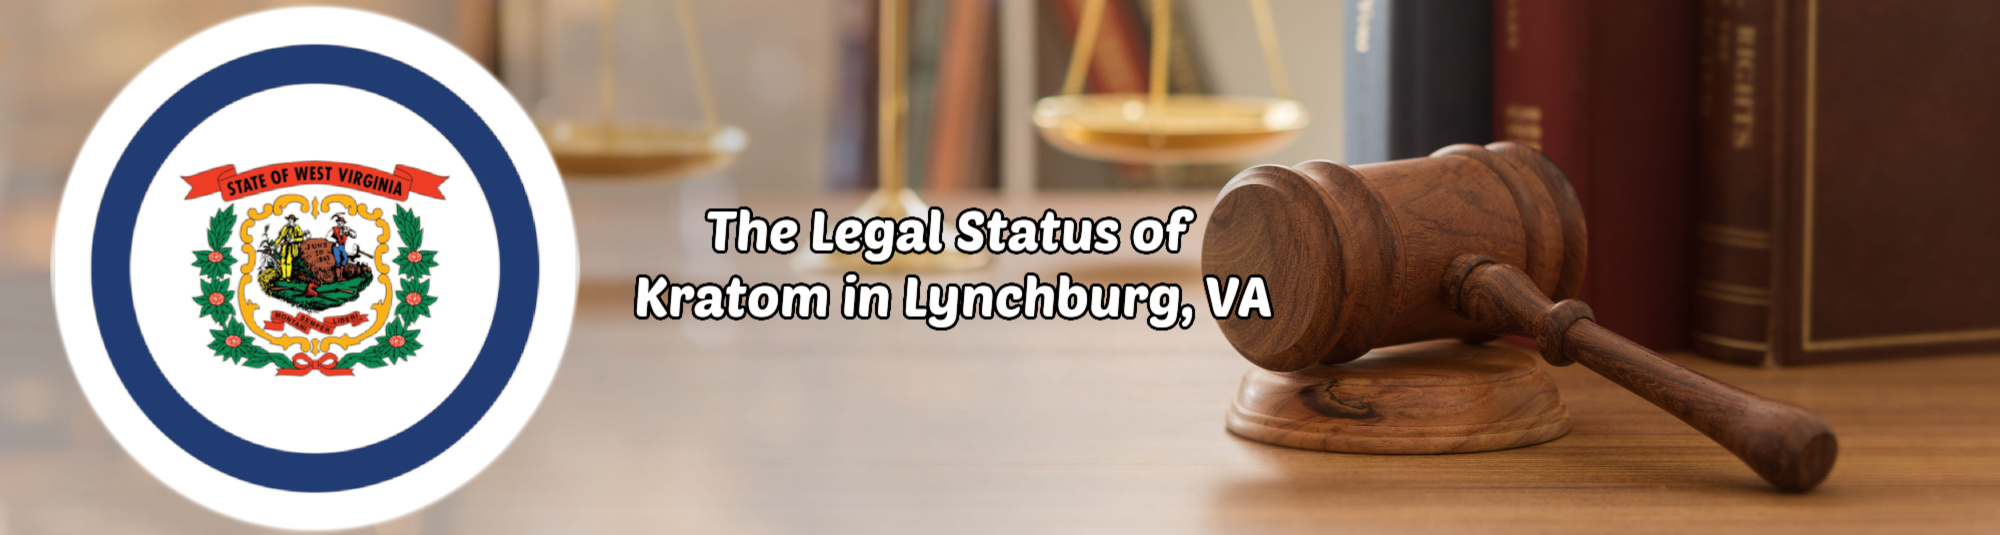 image of the legal status of kratom in lynchburg va